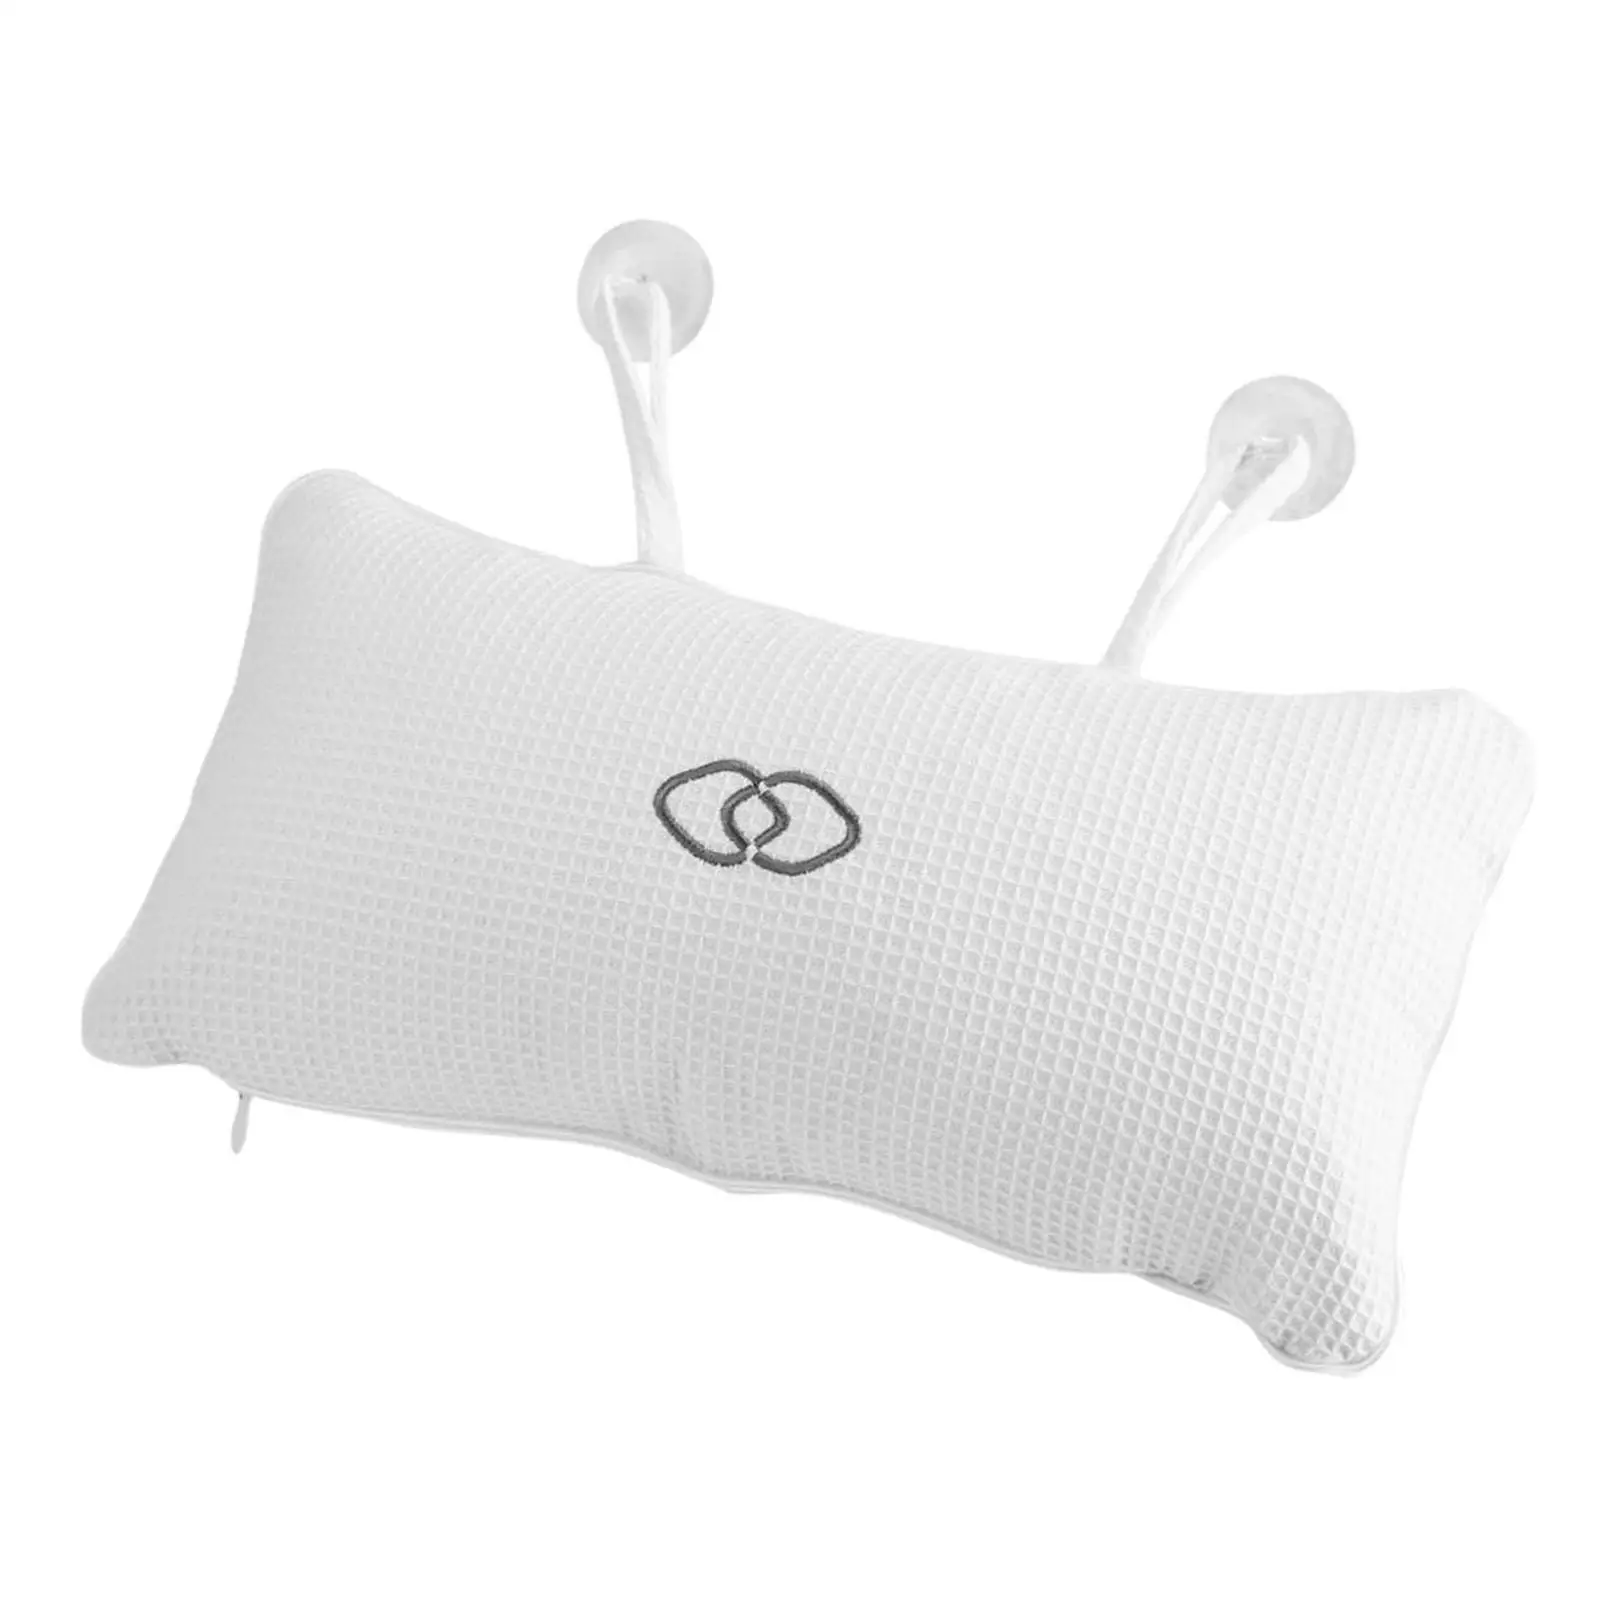 Thick Bathtub Headrest Soft with Suction Caps Bathtub Cushion for Girlfriend Lovers